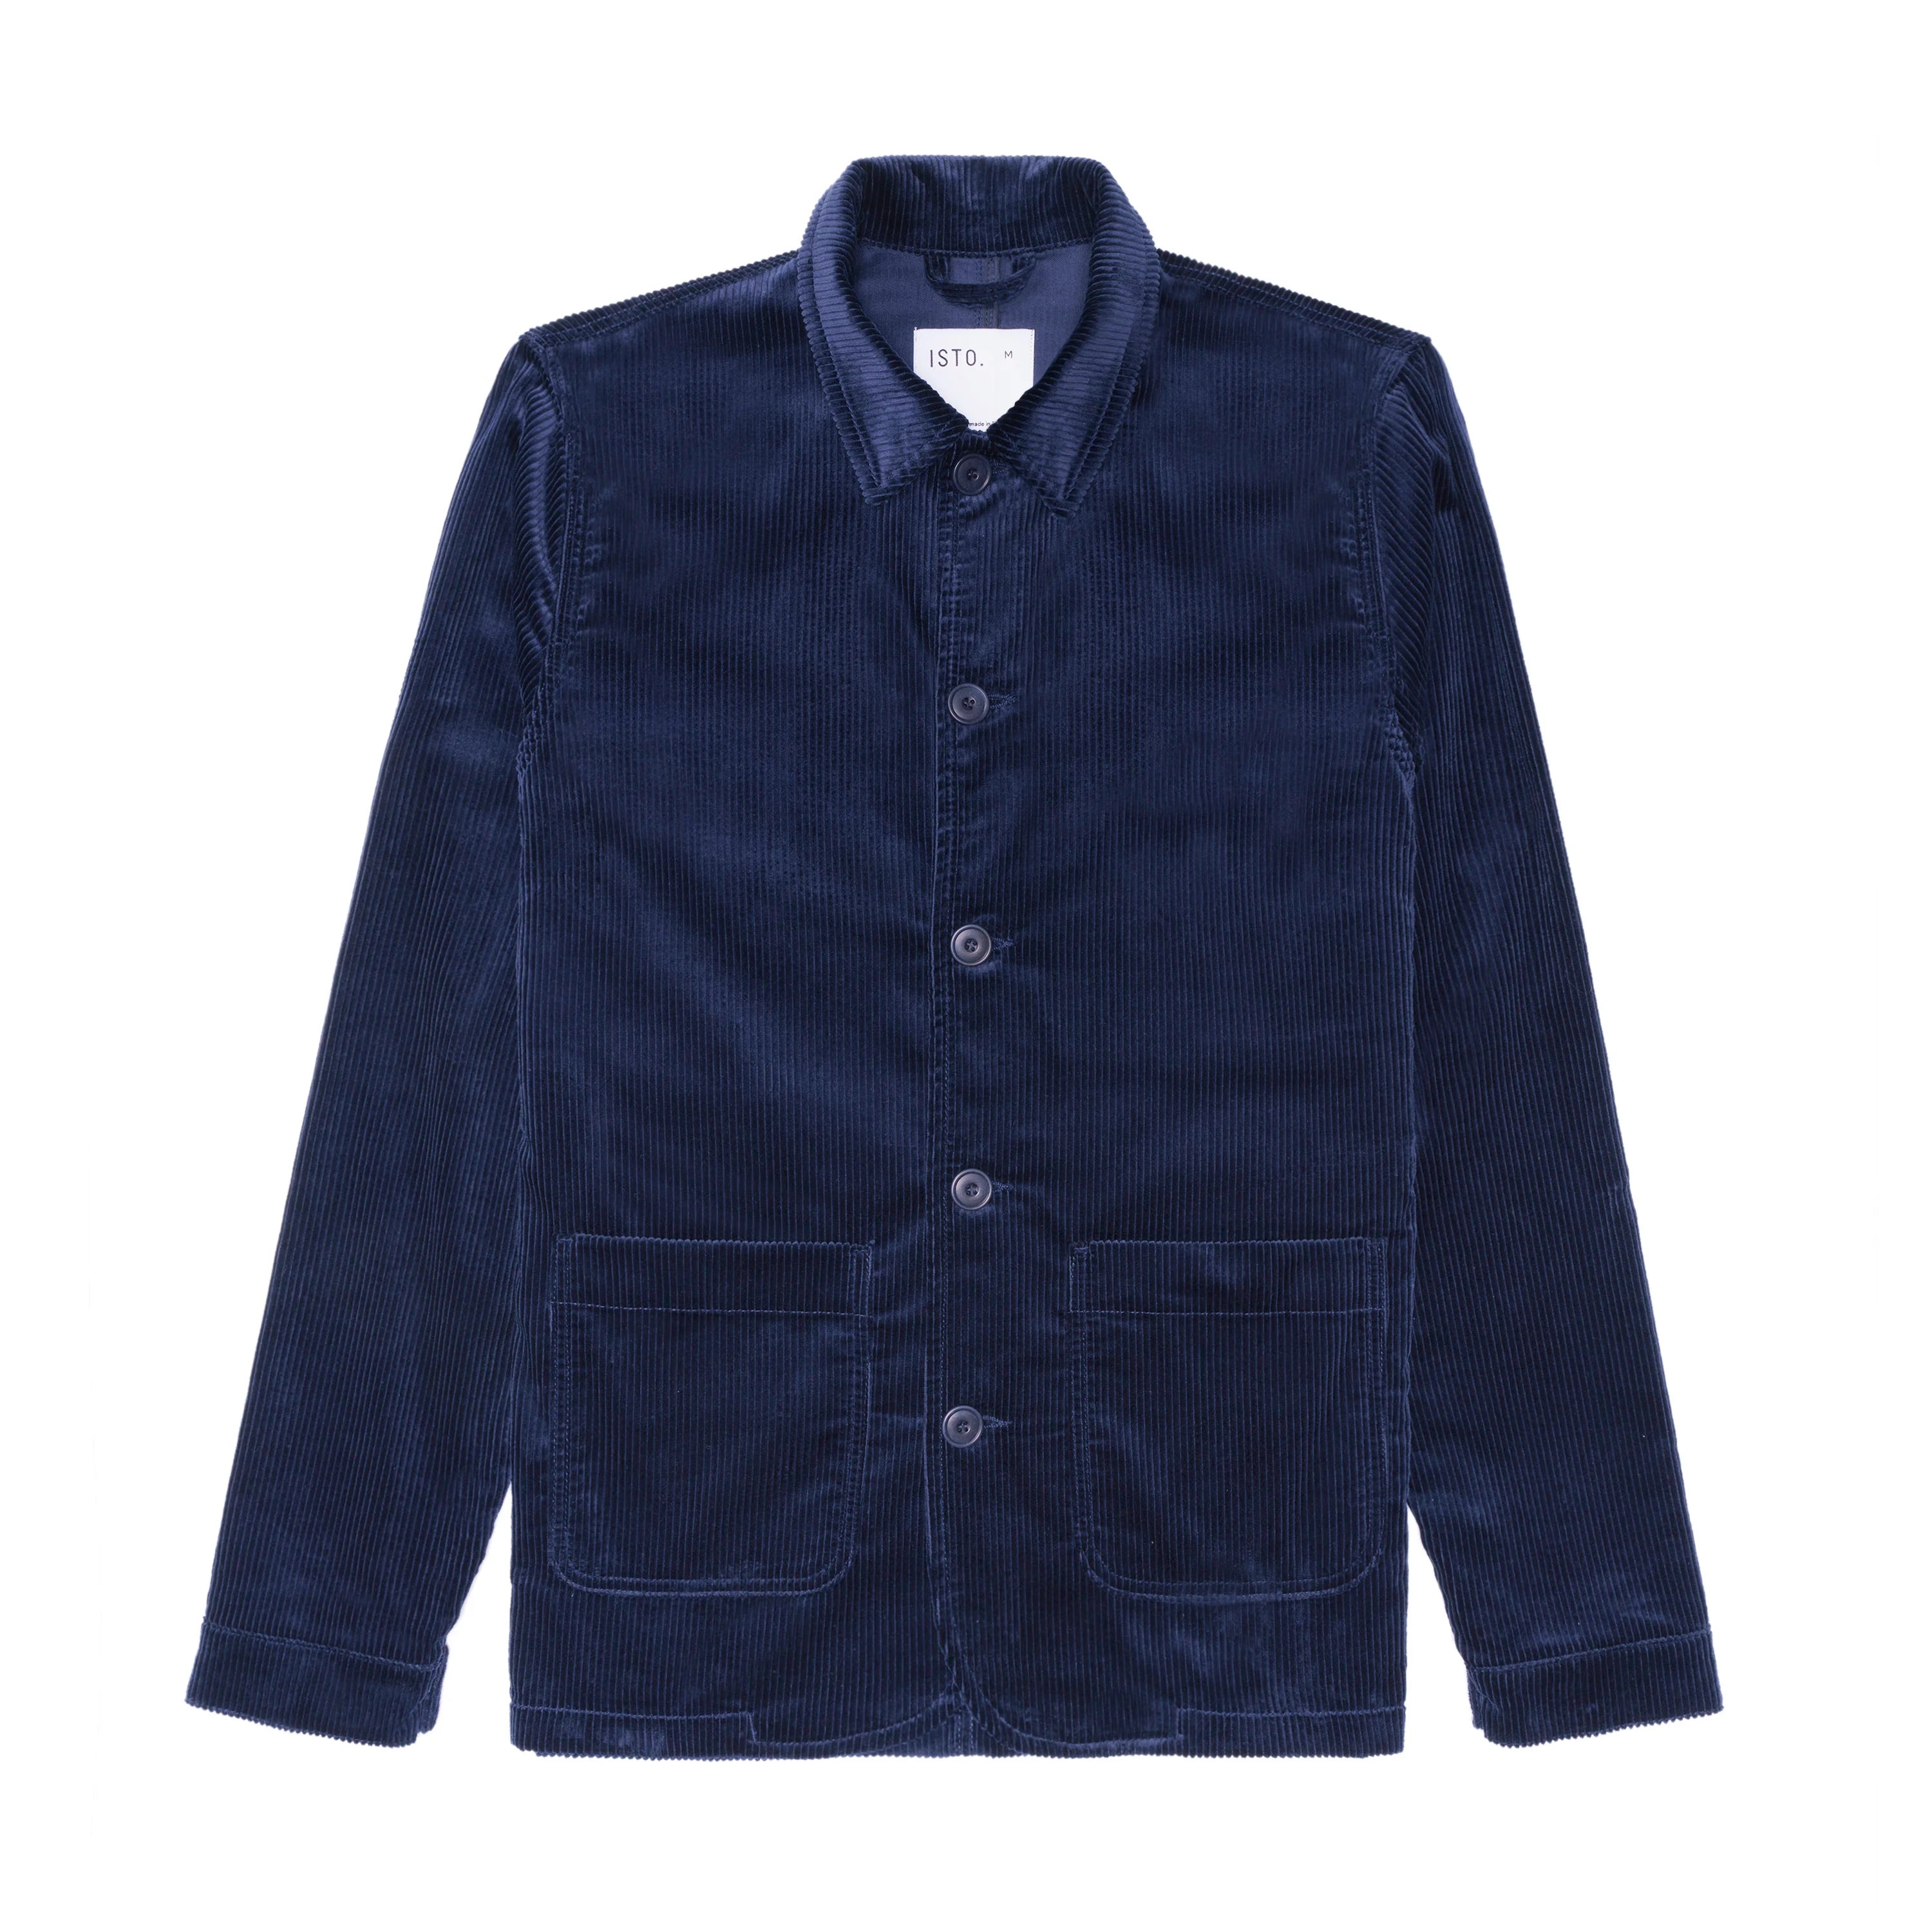 Corduroy Work Jacket Navy - Organic Cotton | ISTO.